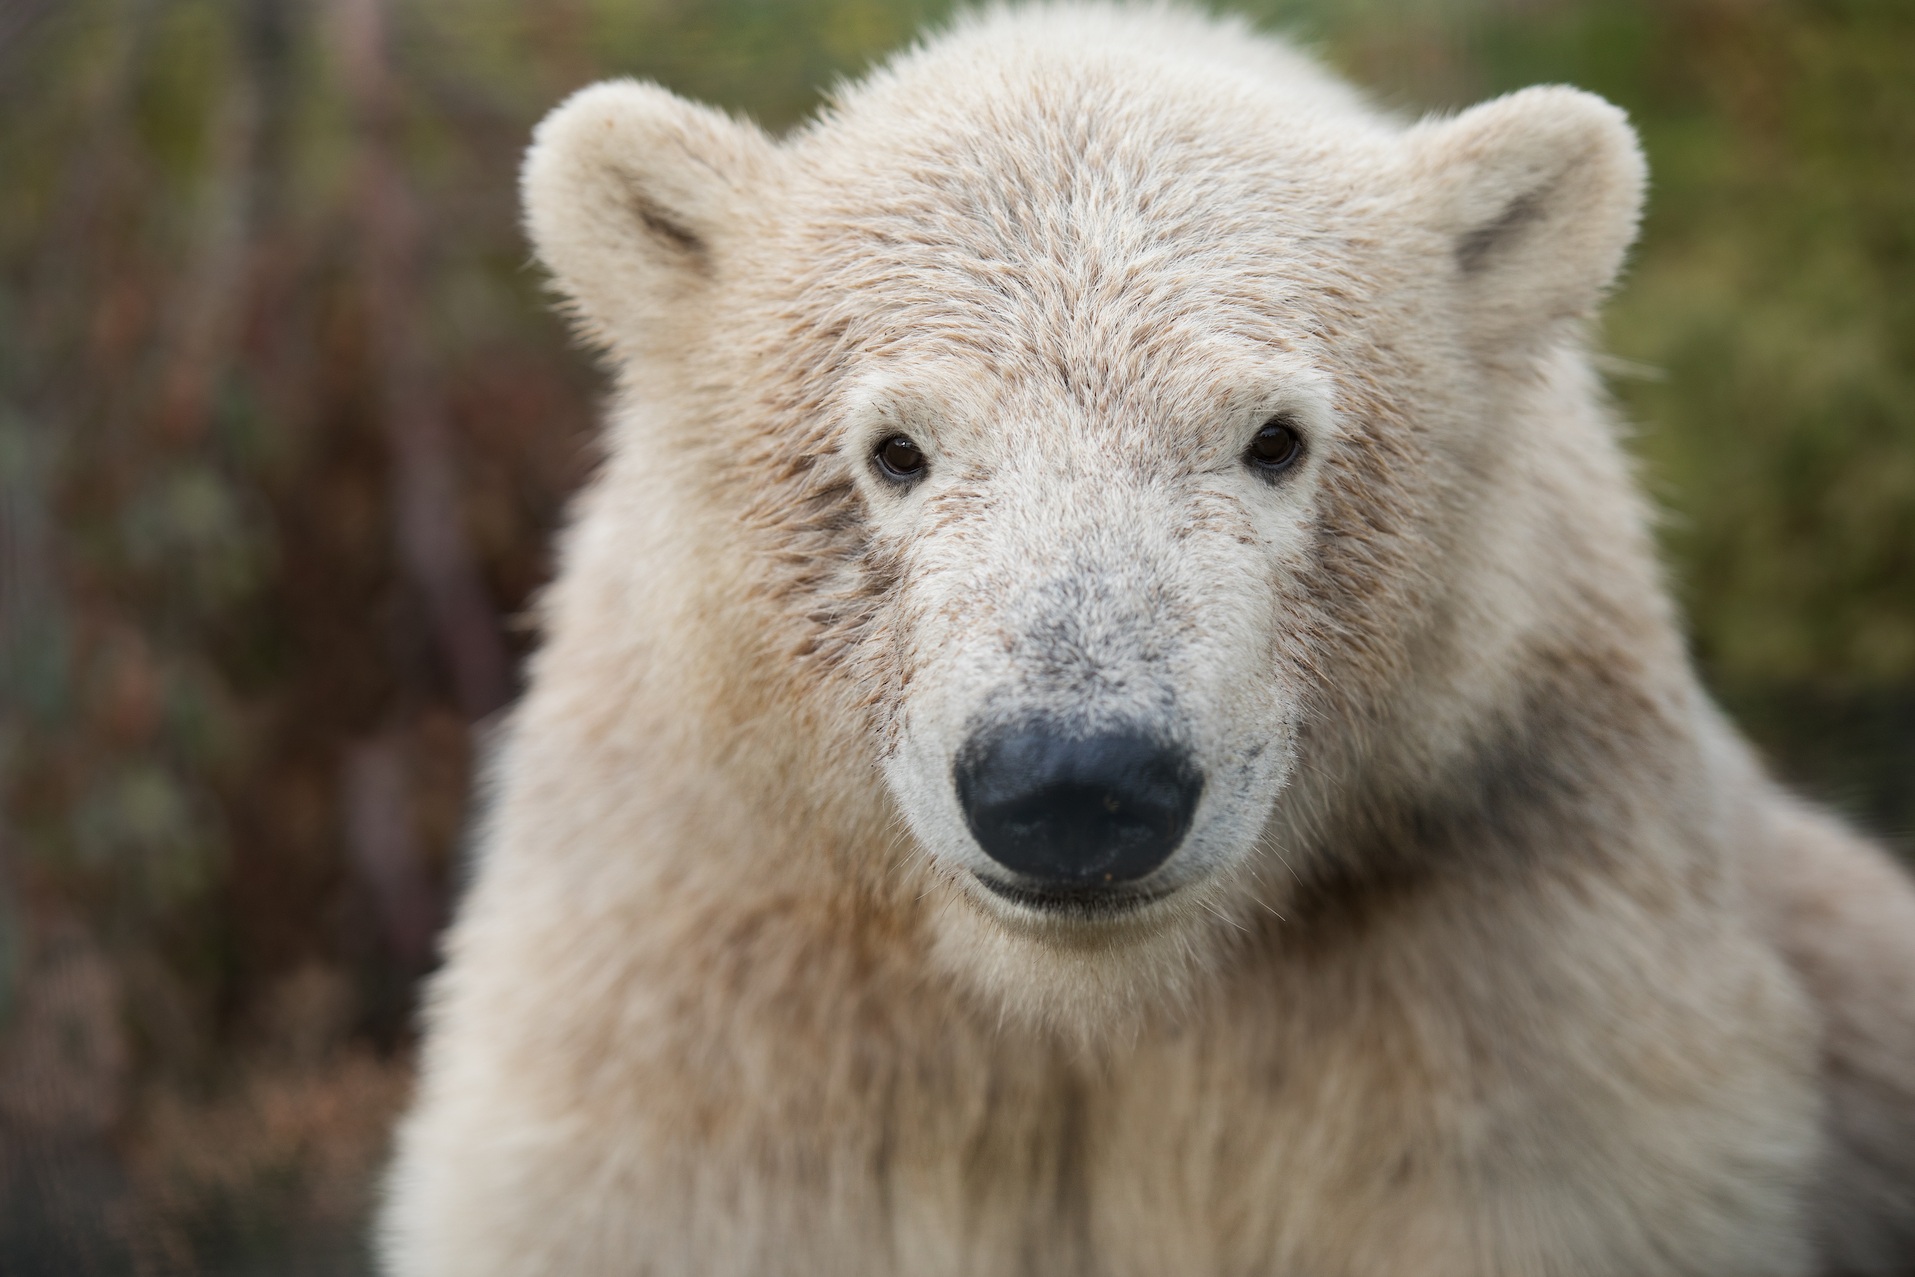 Hamish polar bear cub sitting facing camera filling the frame eye contact

Image: SIAN ADDISON 2020